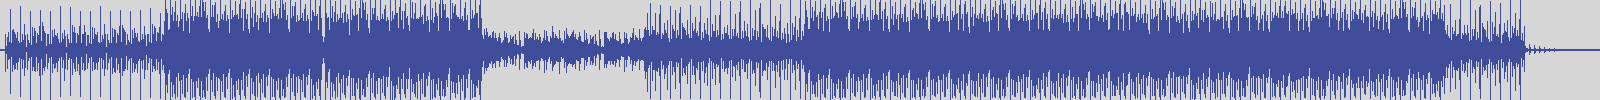 nf_boyz_records [NFY006] Goodeeva Project - Antelope Canyon [Glitch Beats Mix] audio wave form